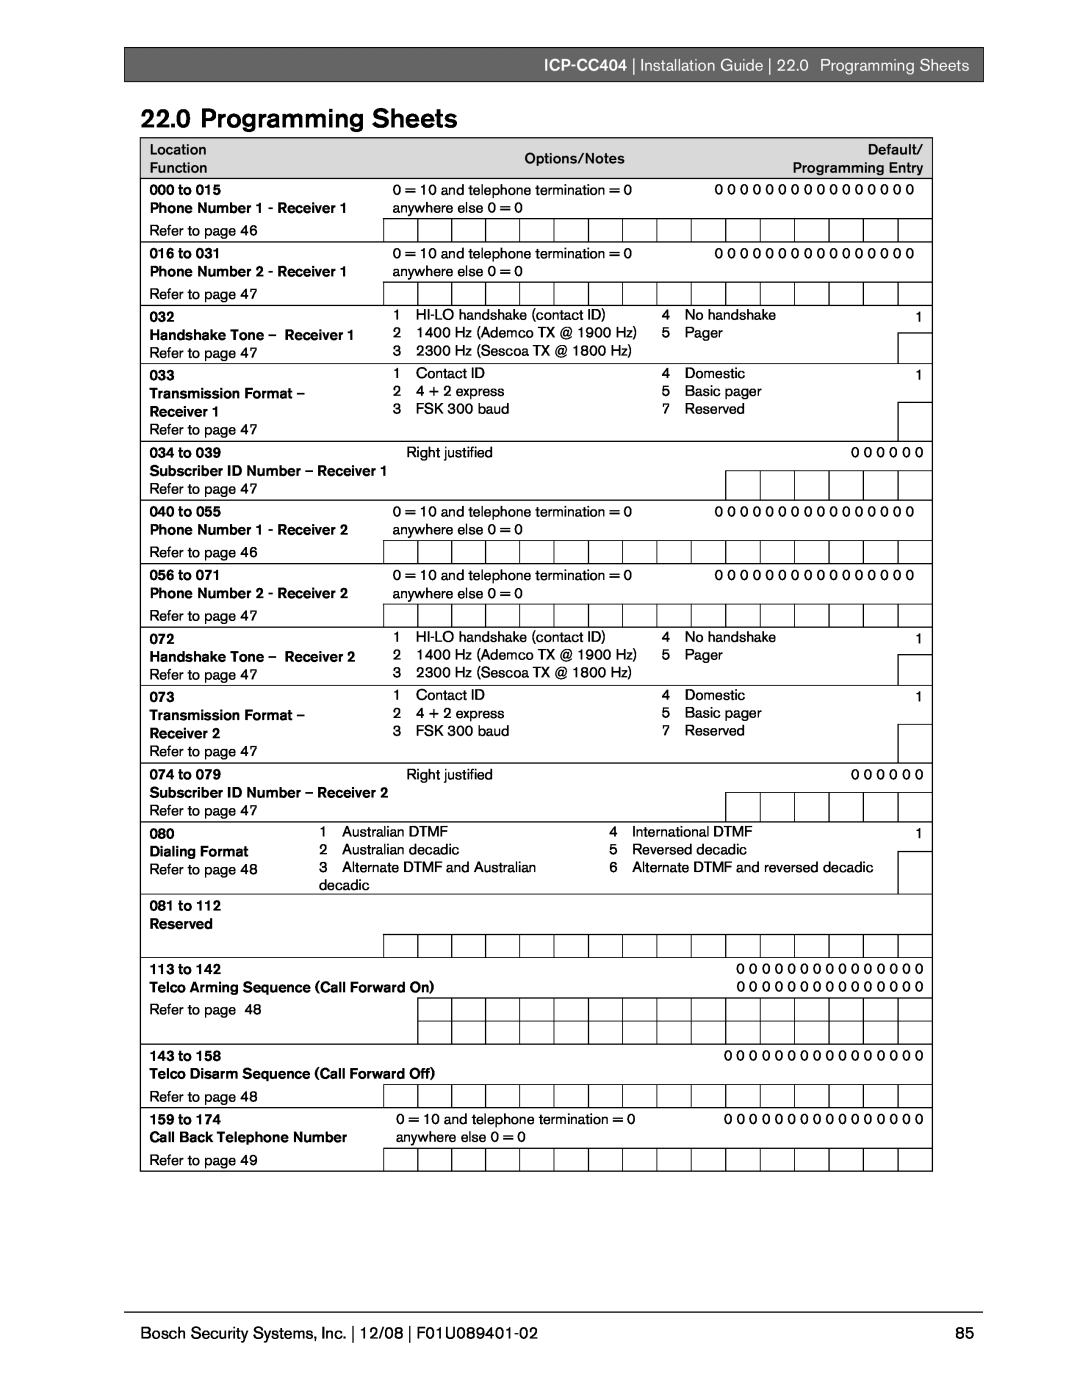 Bosch Appliances ICP-CC404 manual Programming Sheets 